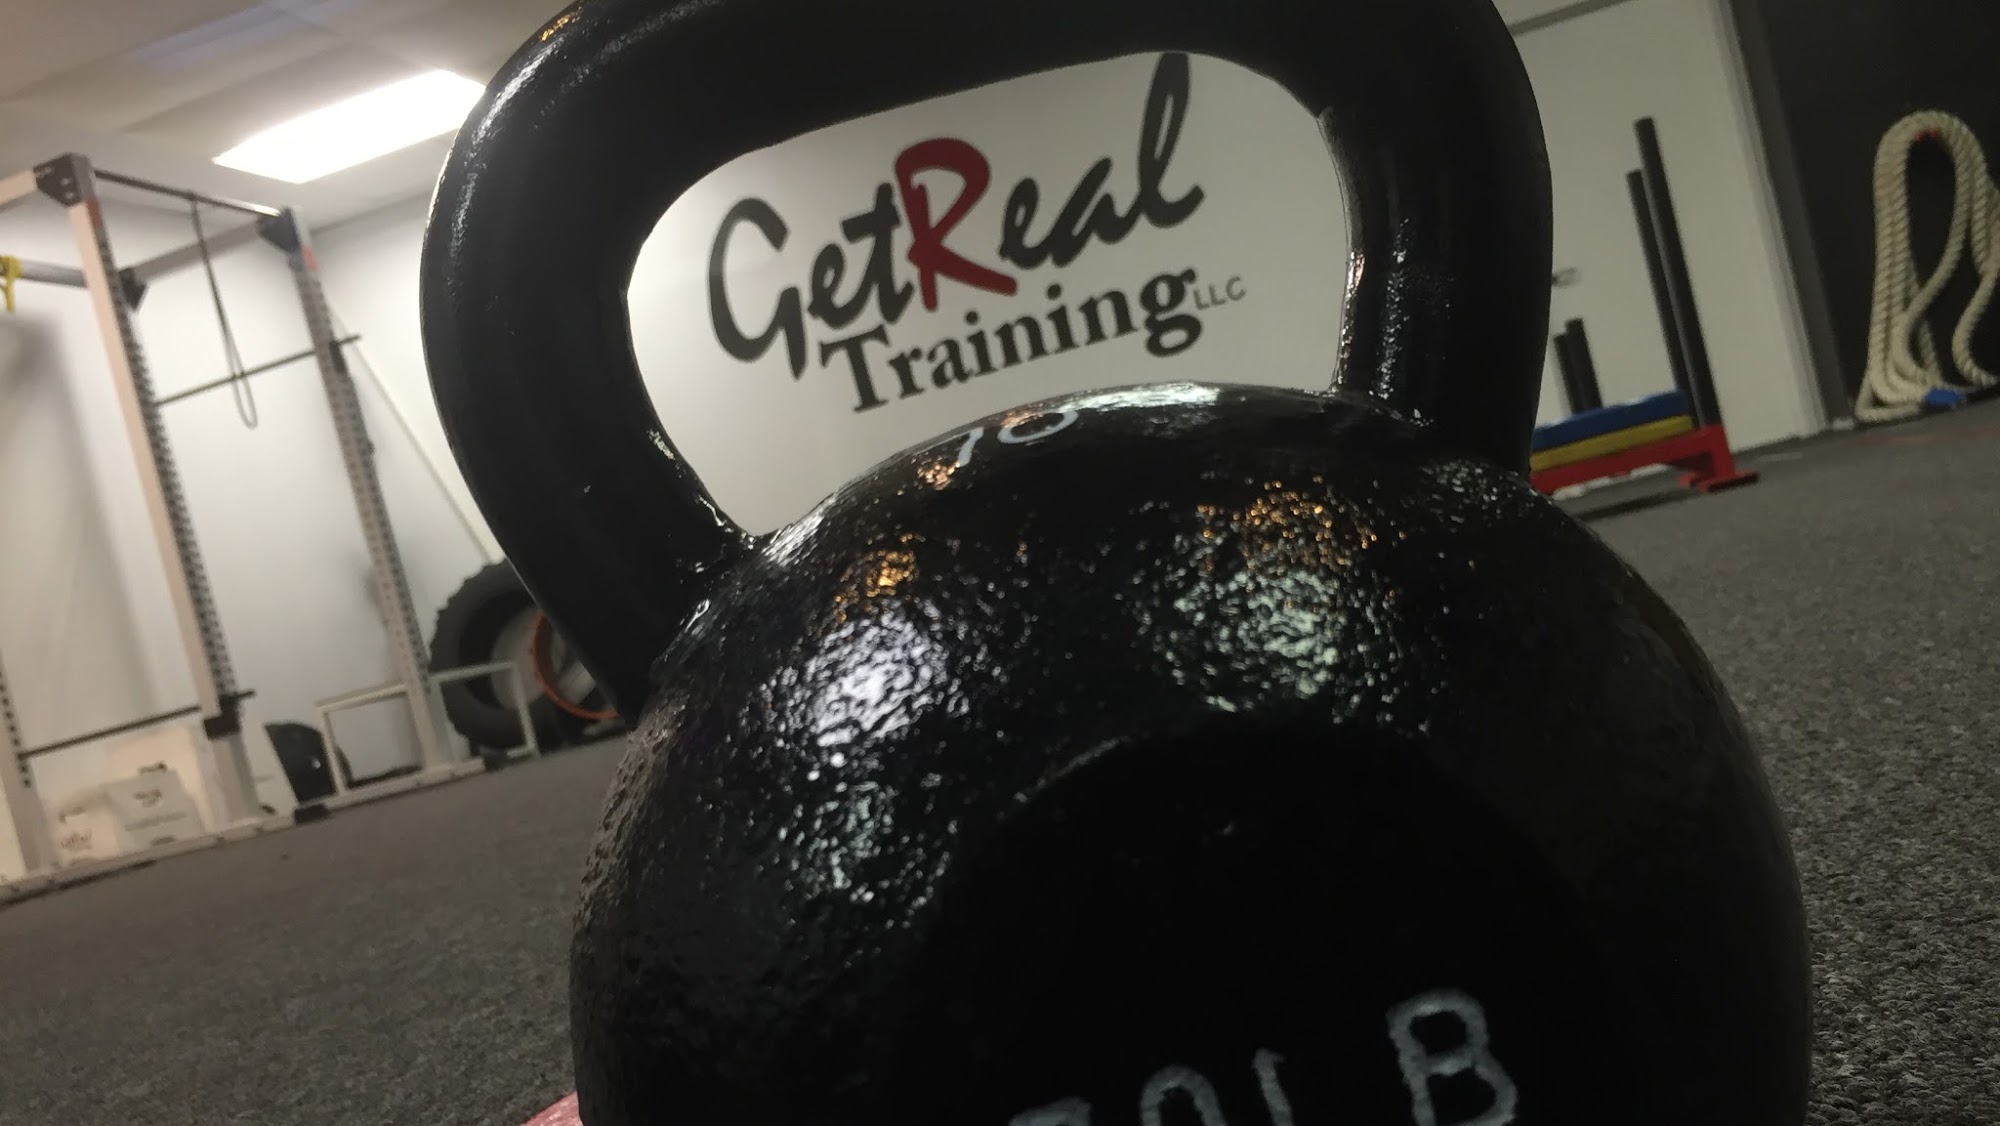 Get Real Training LLC